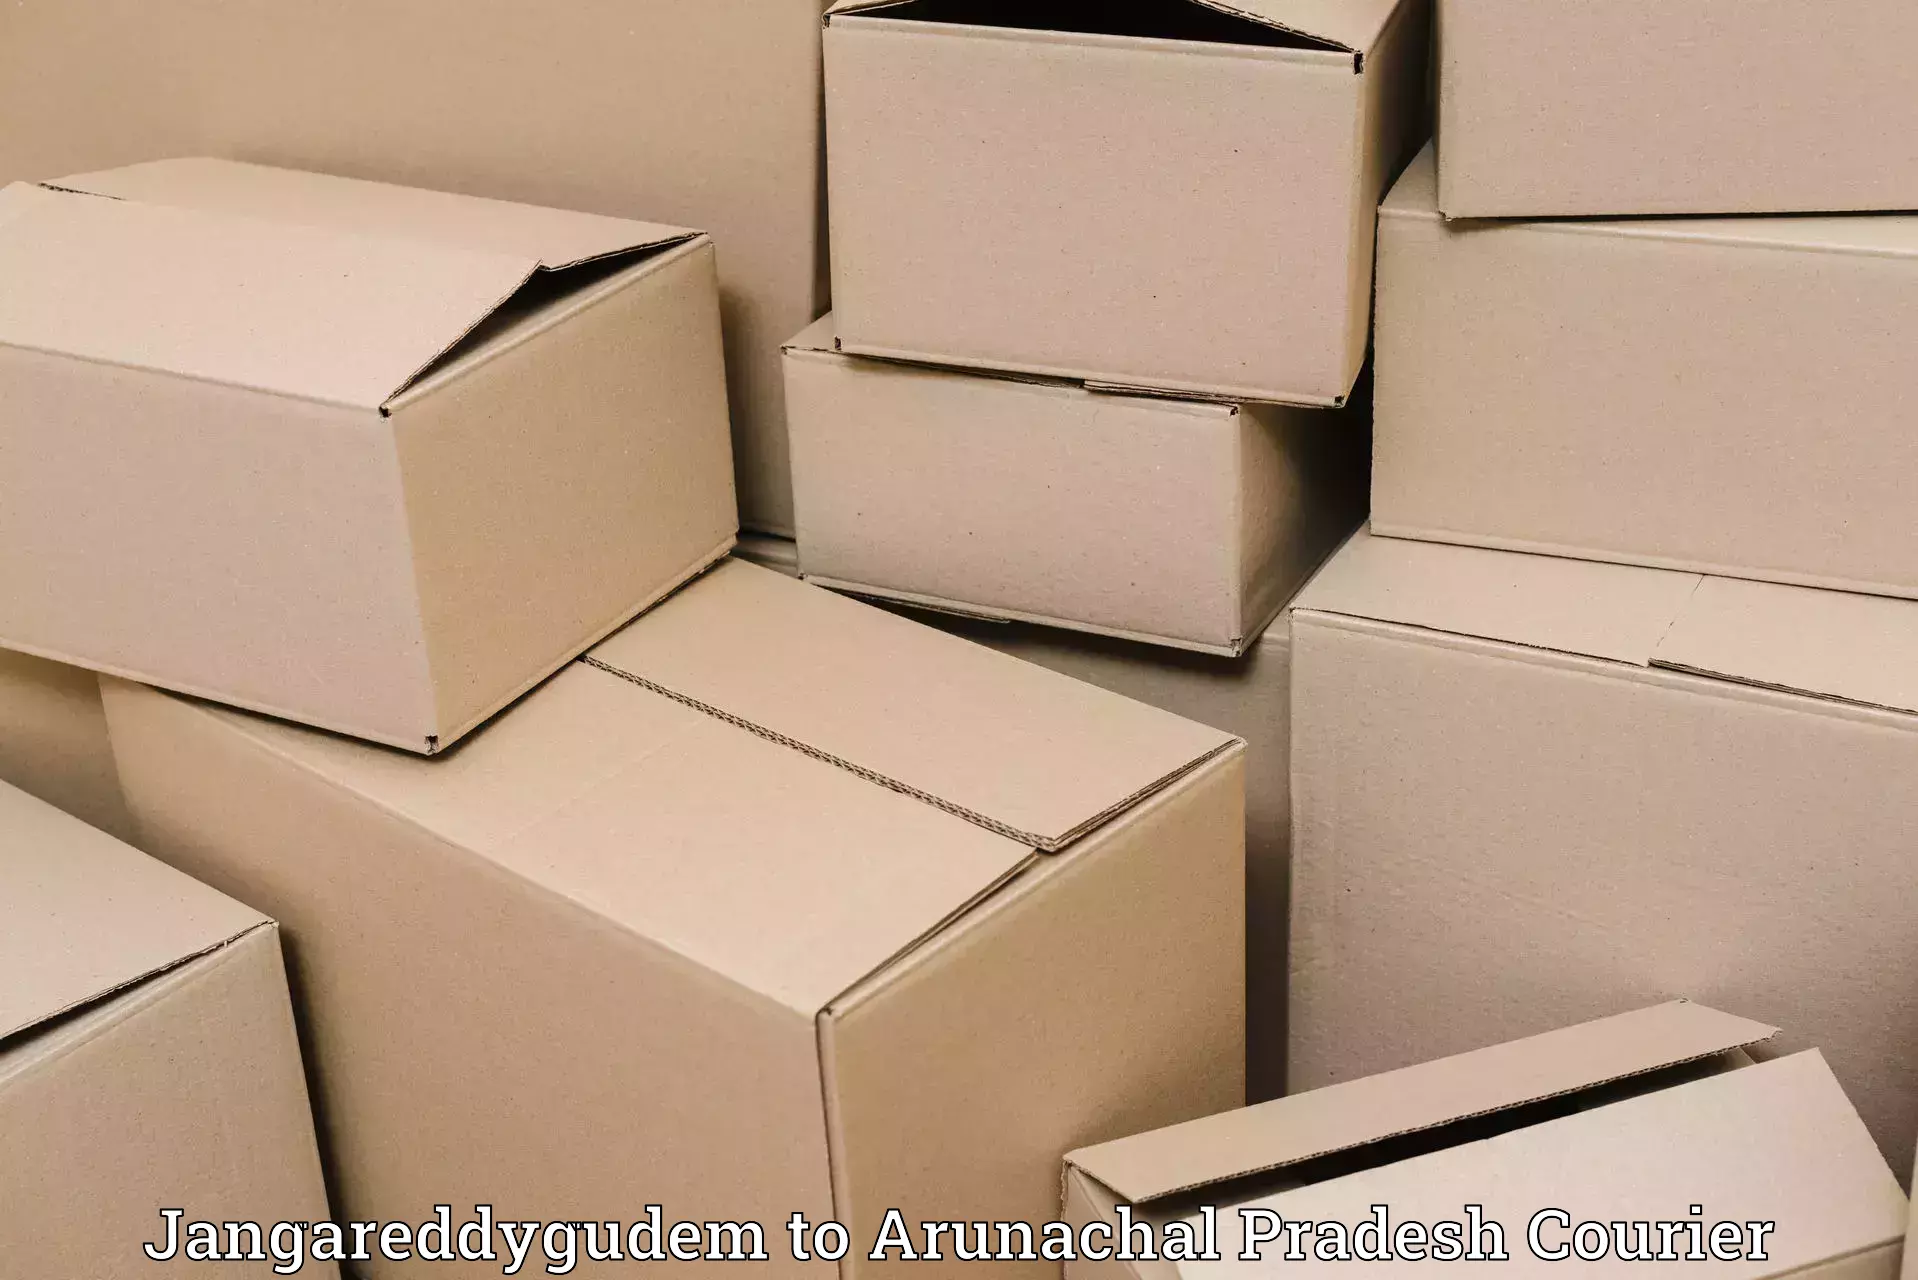 Diverse delivery methods Jangareddygudem to Arunachal Pradesh